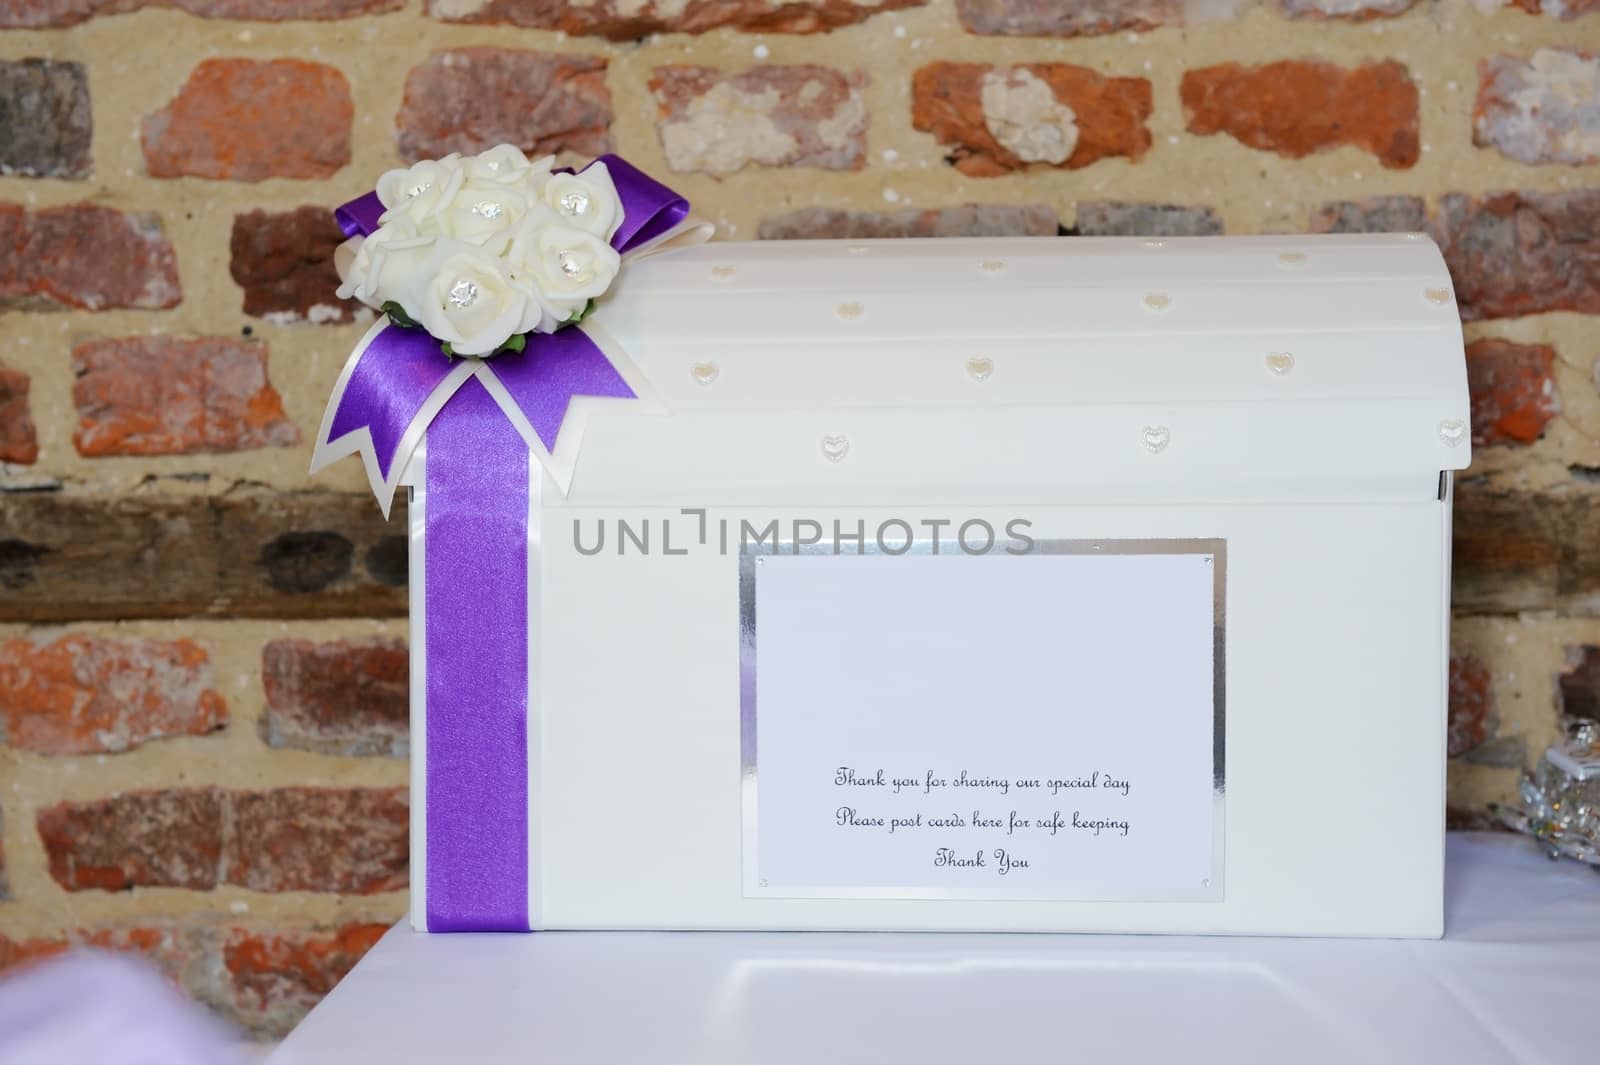 Wedding reception cardbox closeup showing purple ribbon detail